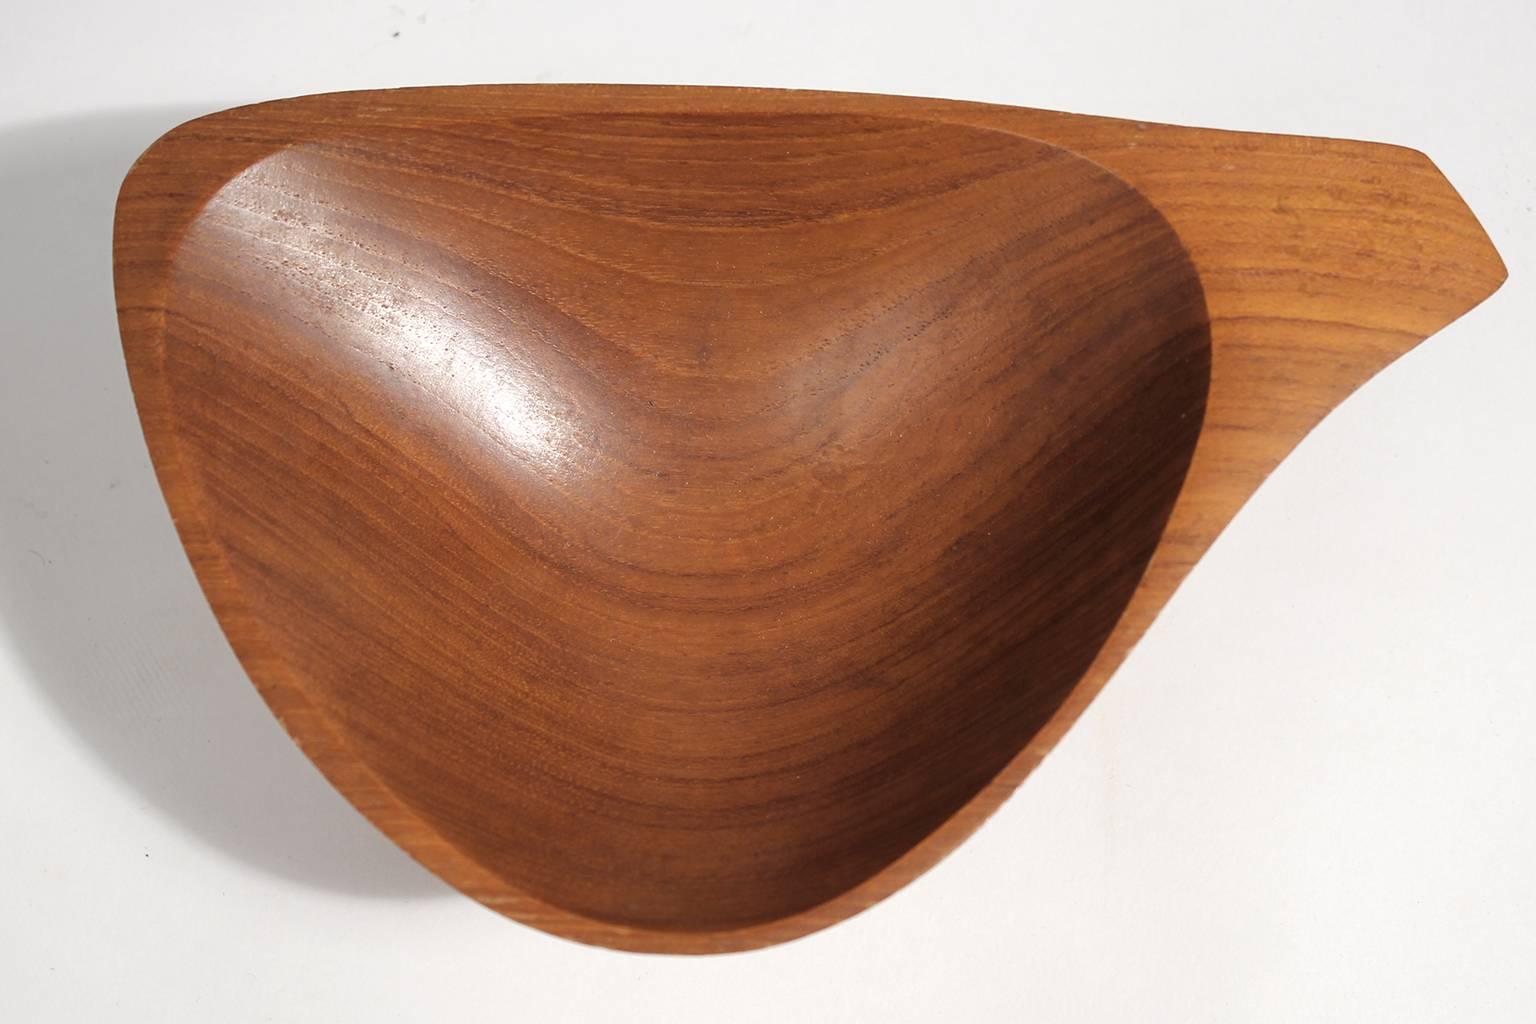 Emil Milan Hand Carved Sculptural Teak Wood Bowl with Sterling Silver Base 1